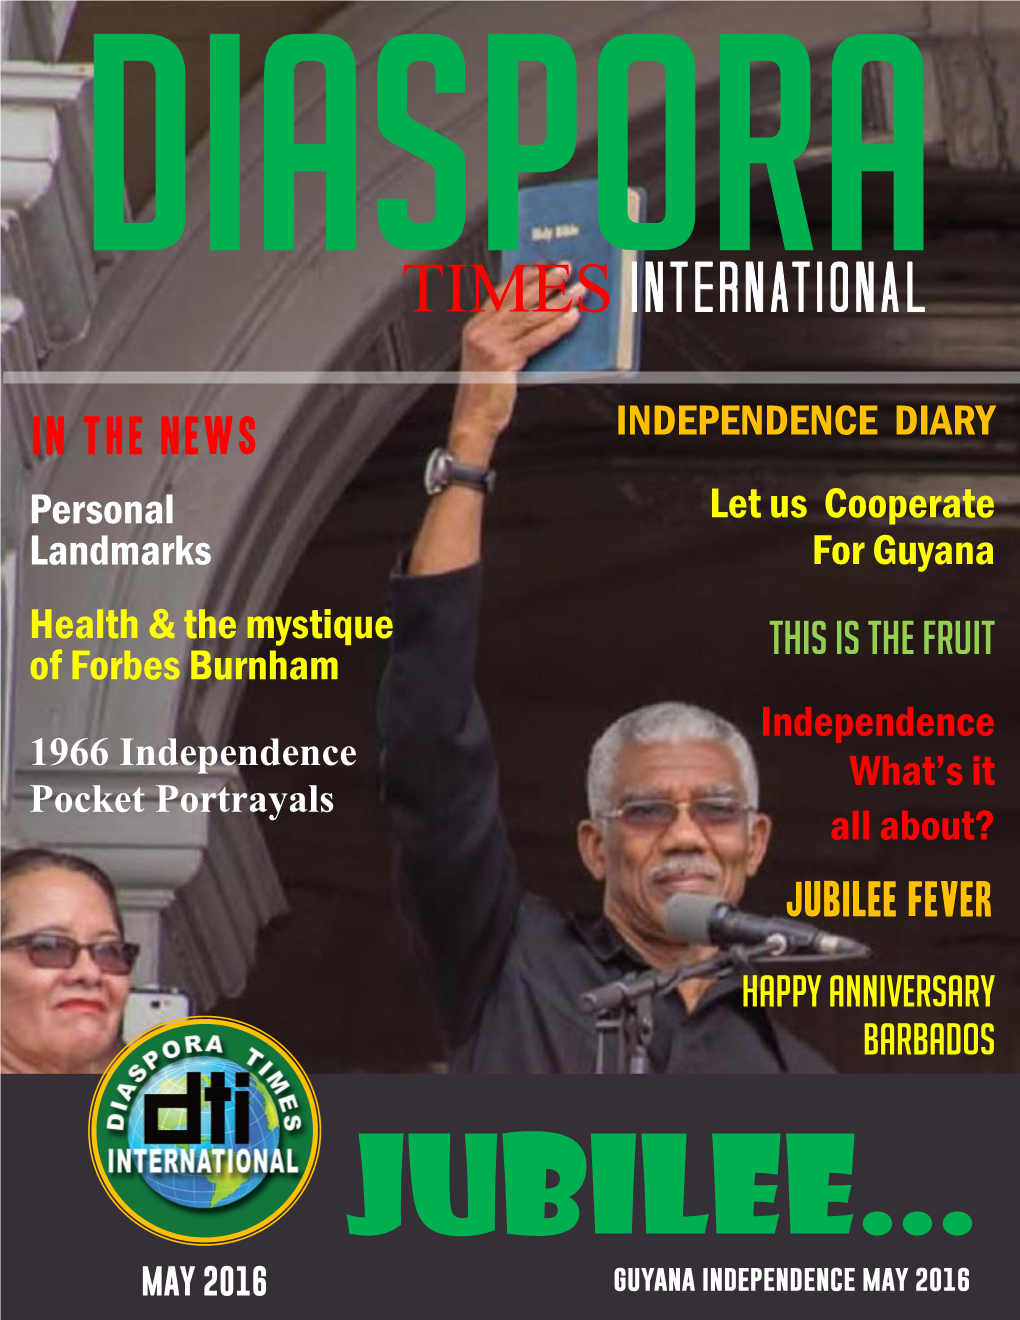 Diaspora Times Monthly News Magazine Issue 2 Volume 5 Times International